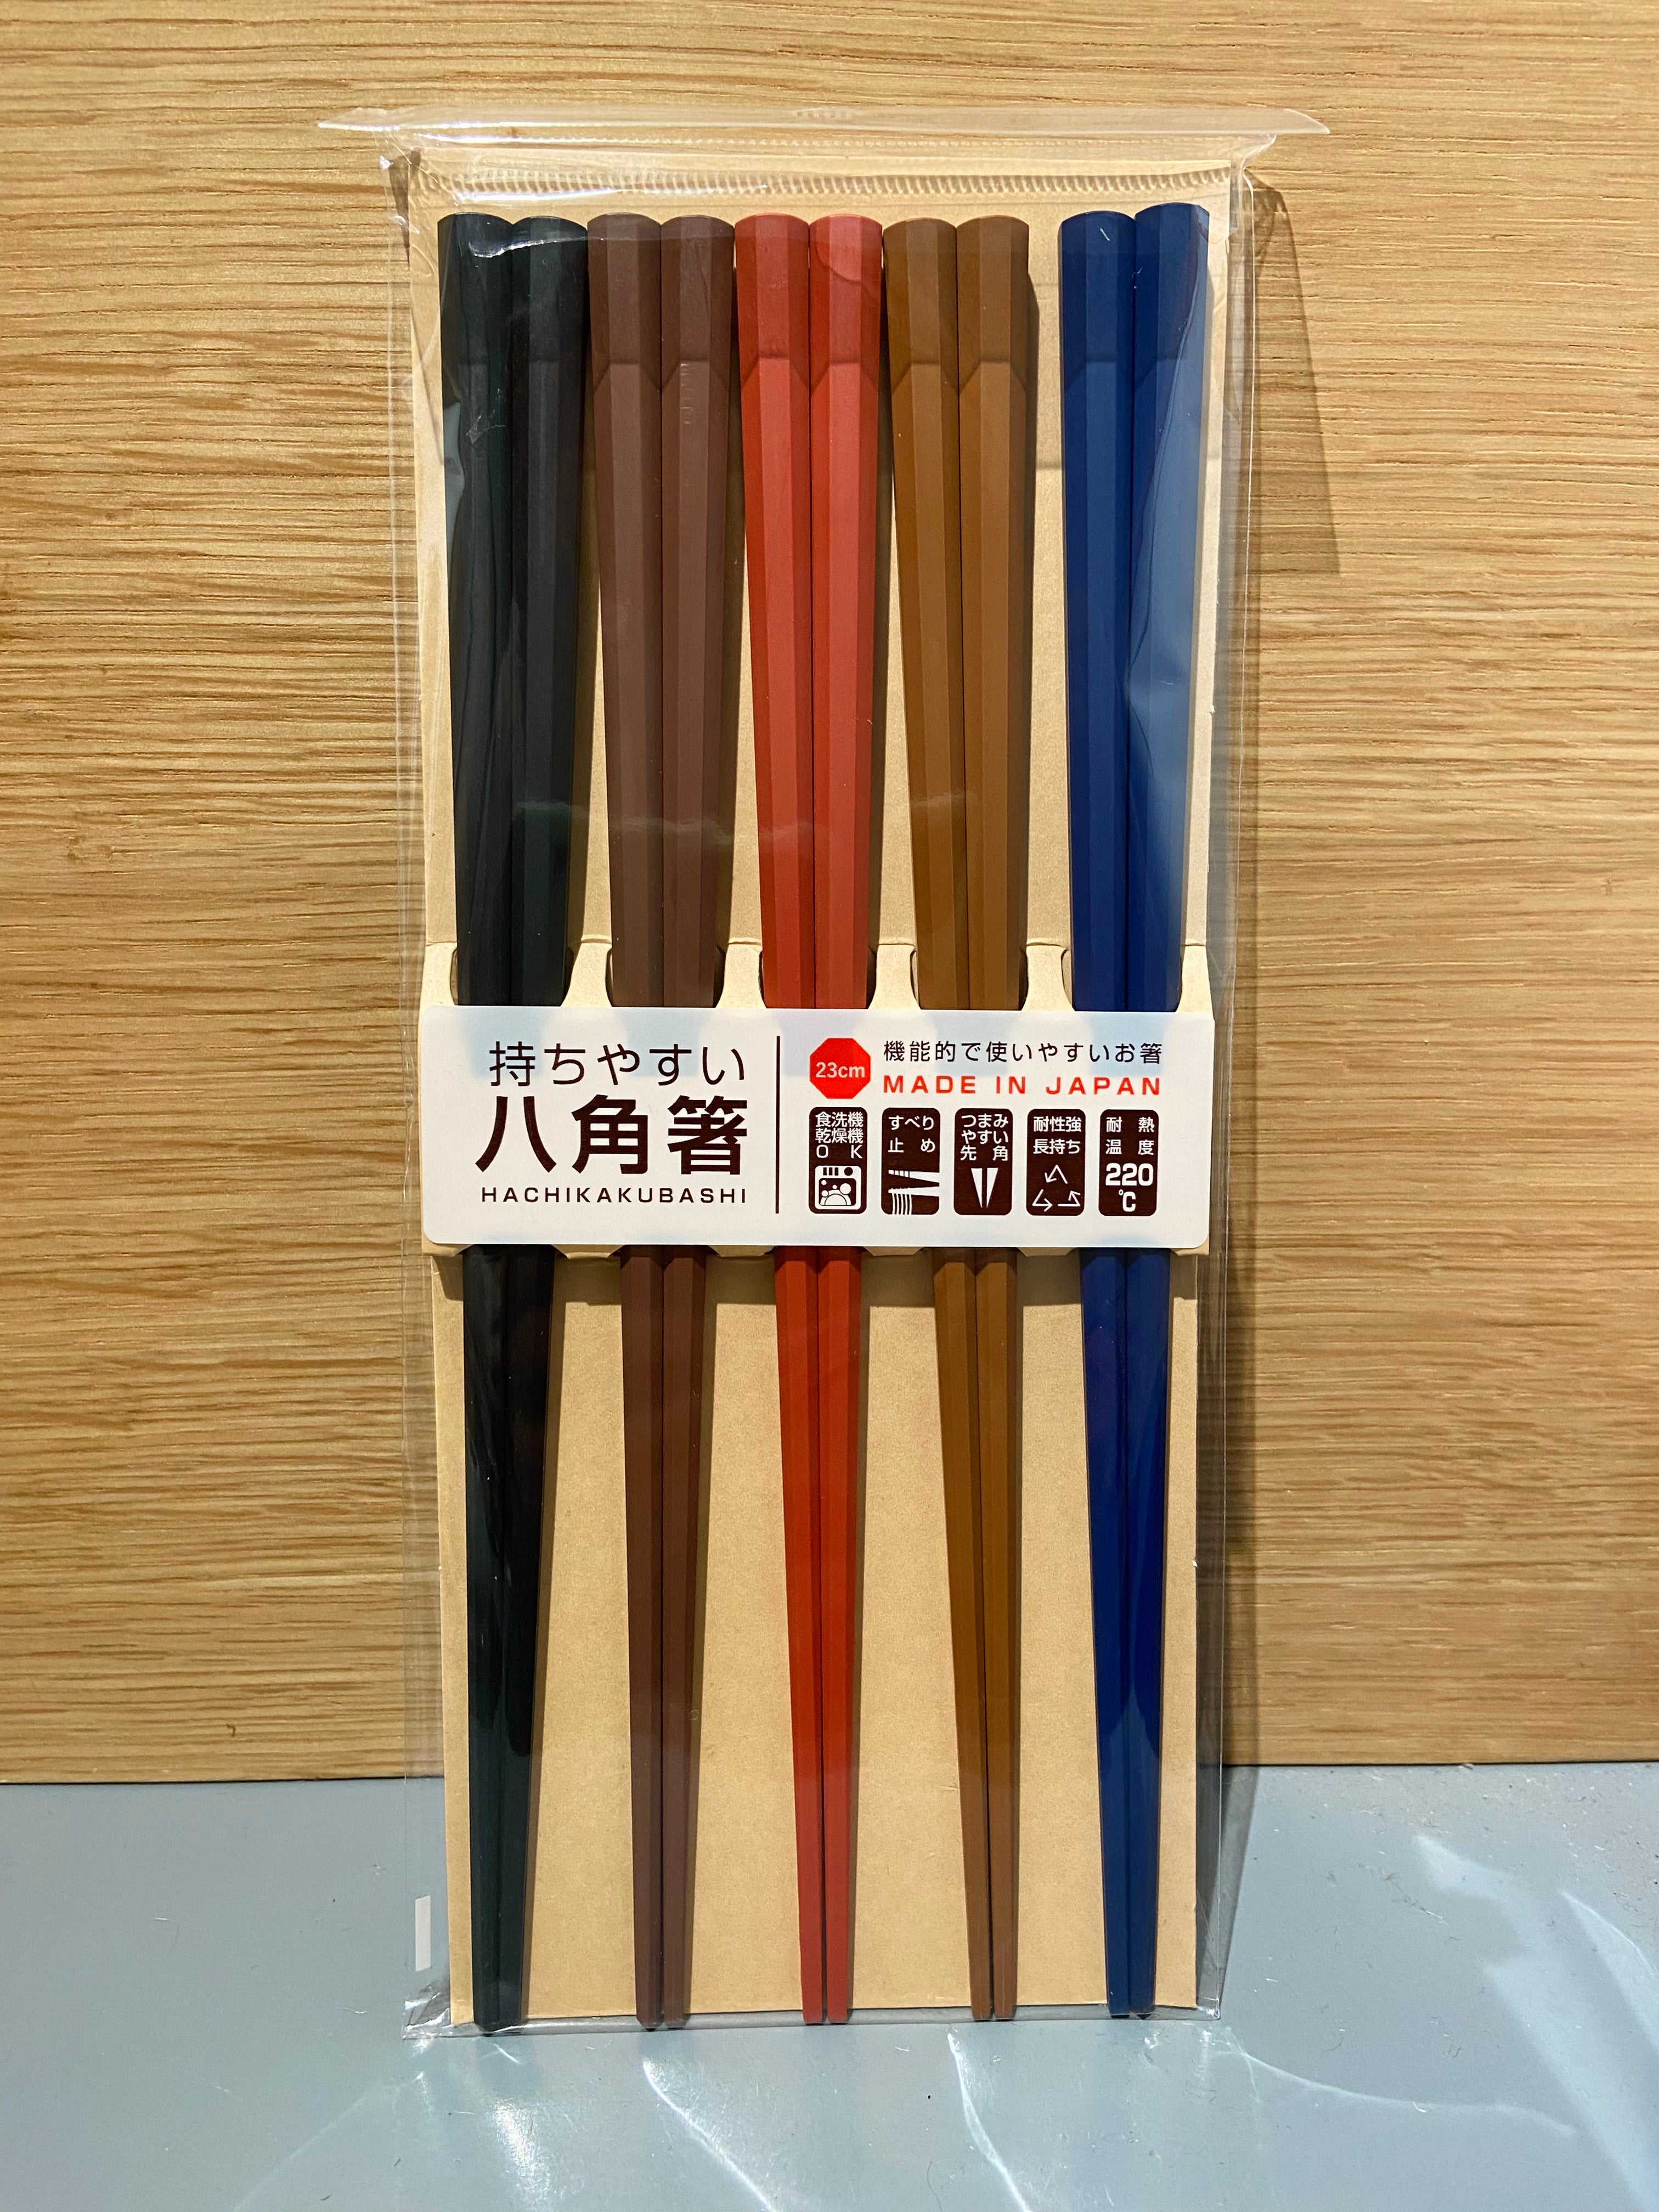 Chopsticks, dark colors